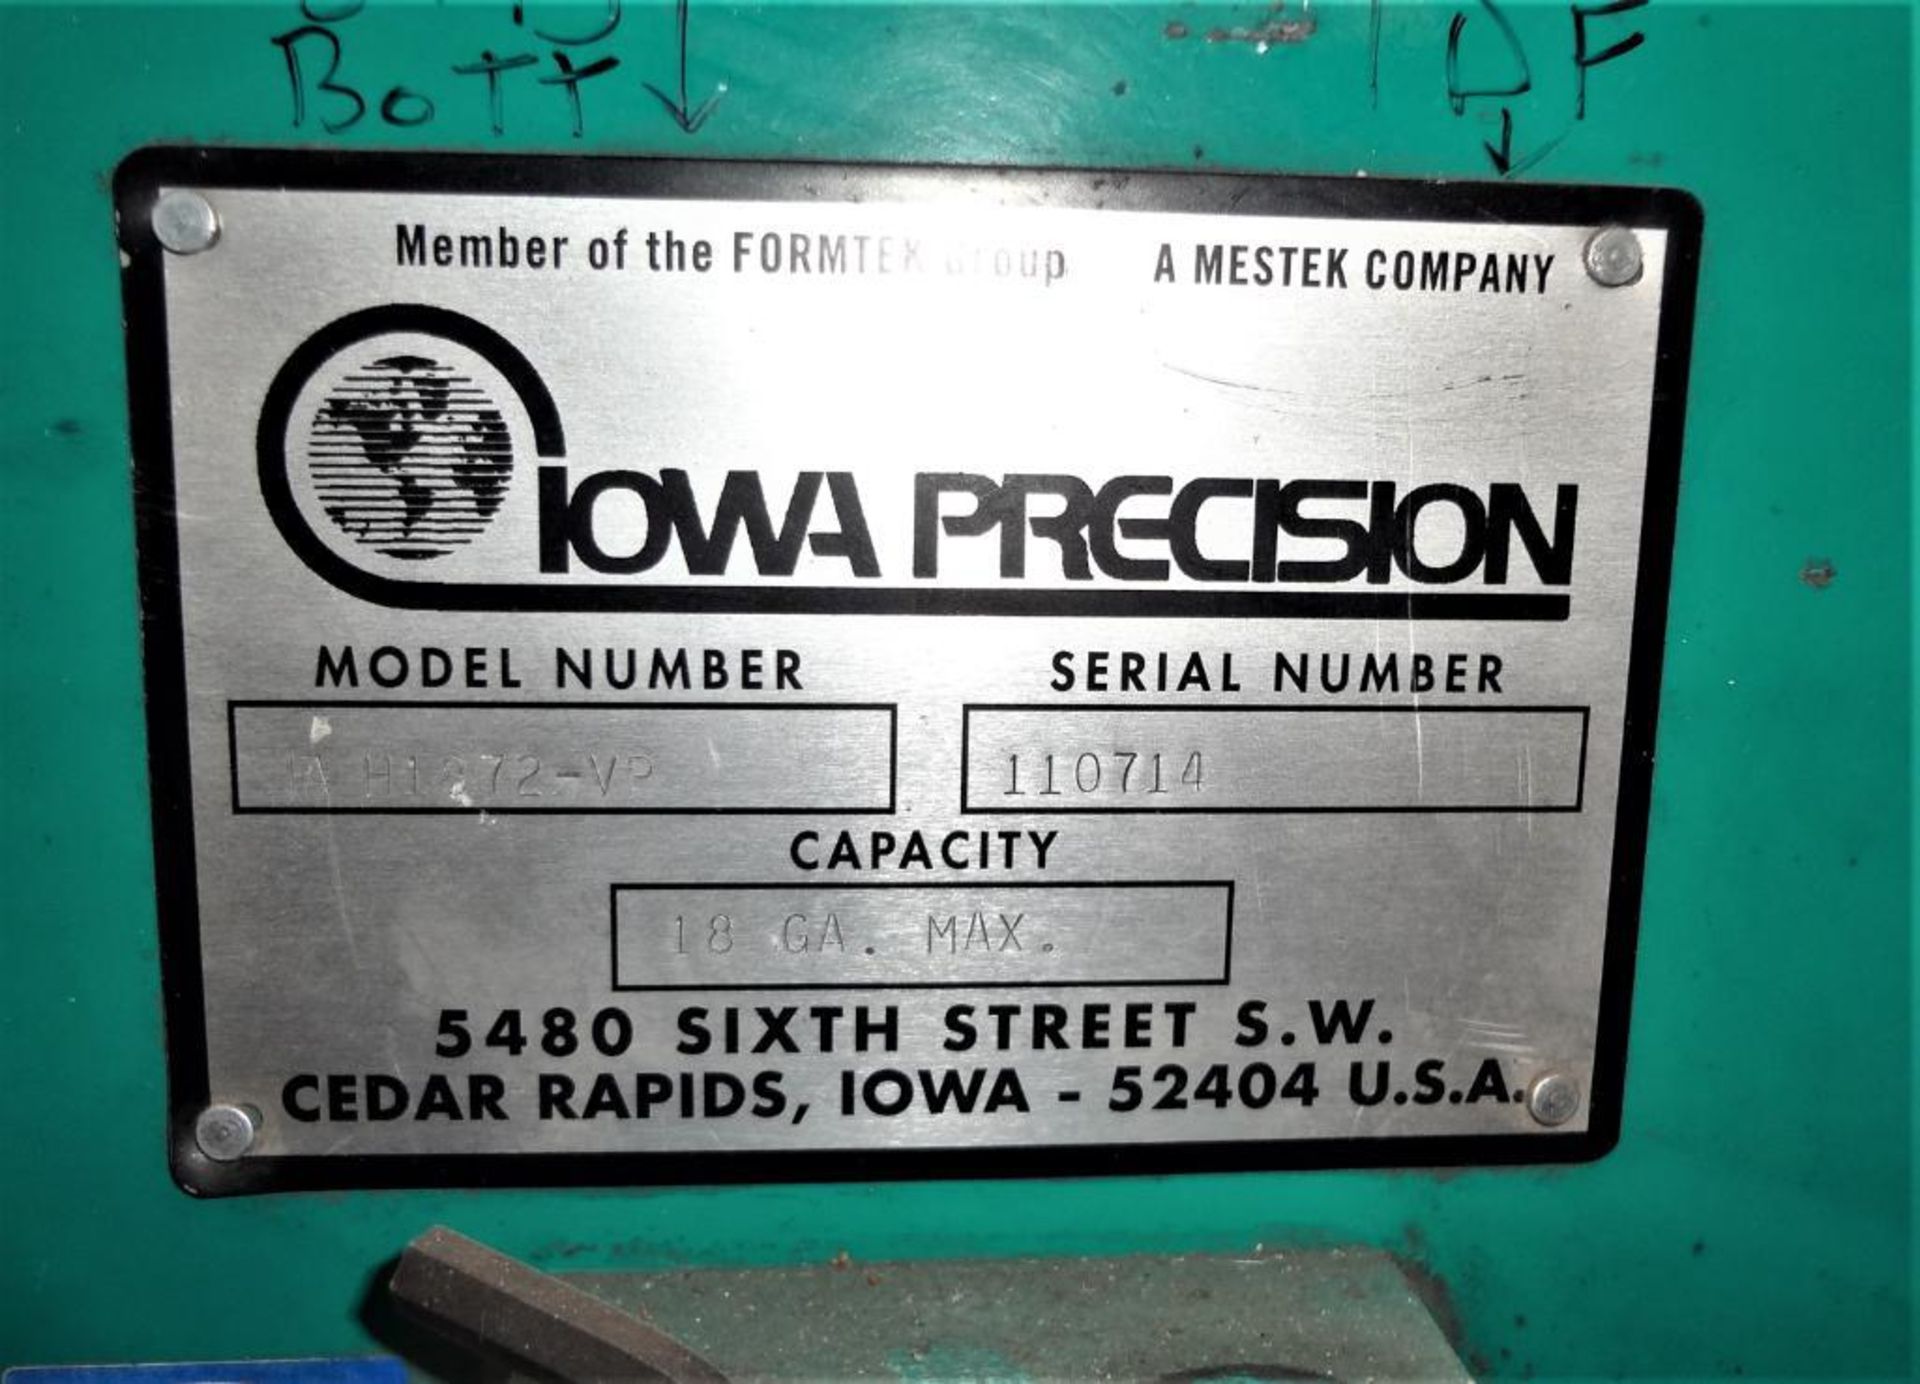 Iowa Precision Whisper-Loc Mdl.FAH-1872-VP Seam Closing Machine, 18 GA - Image 2 of 6